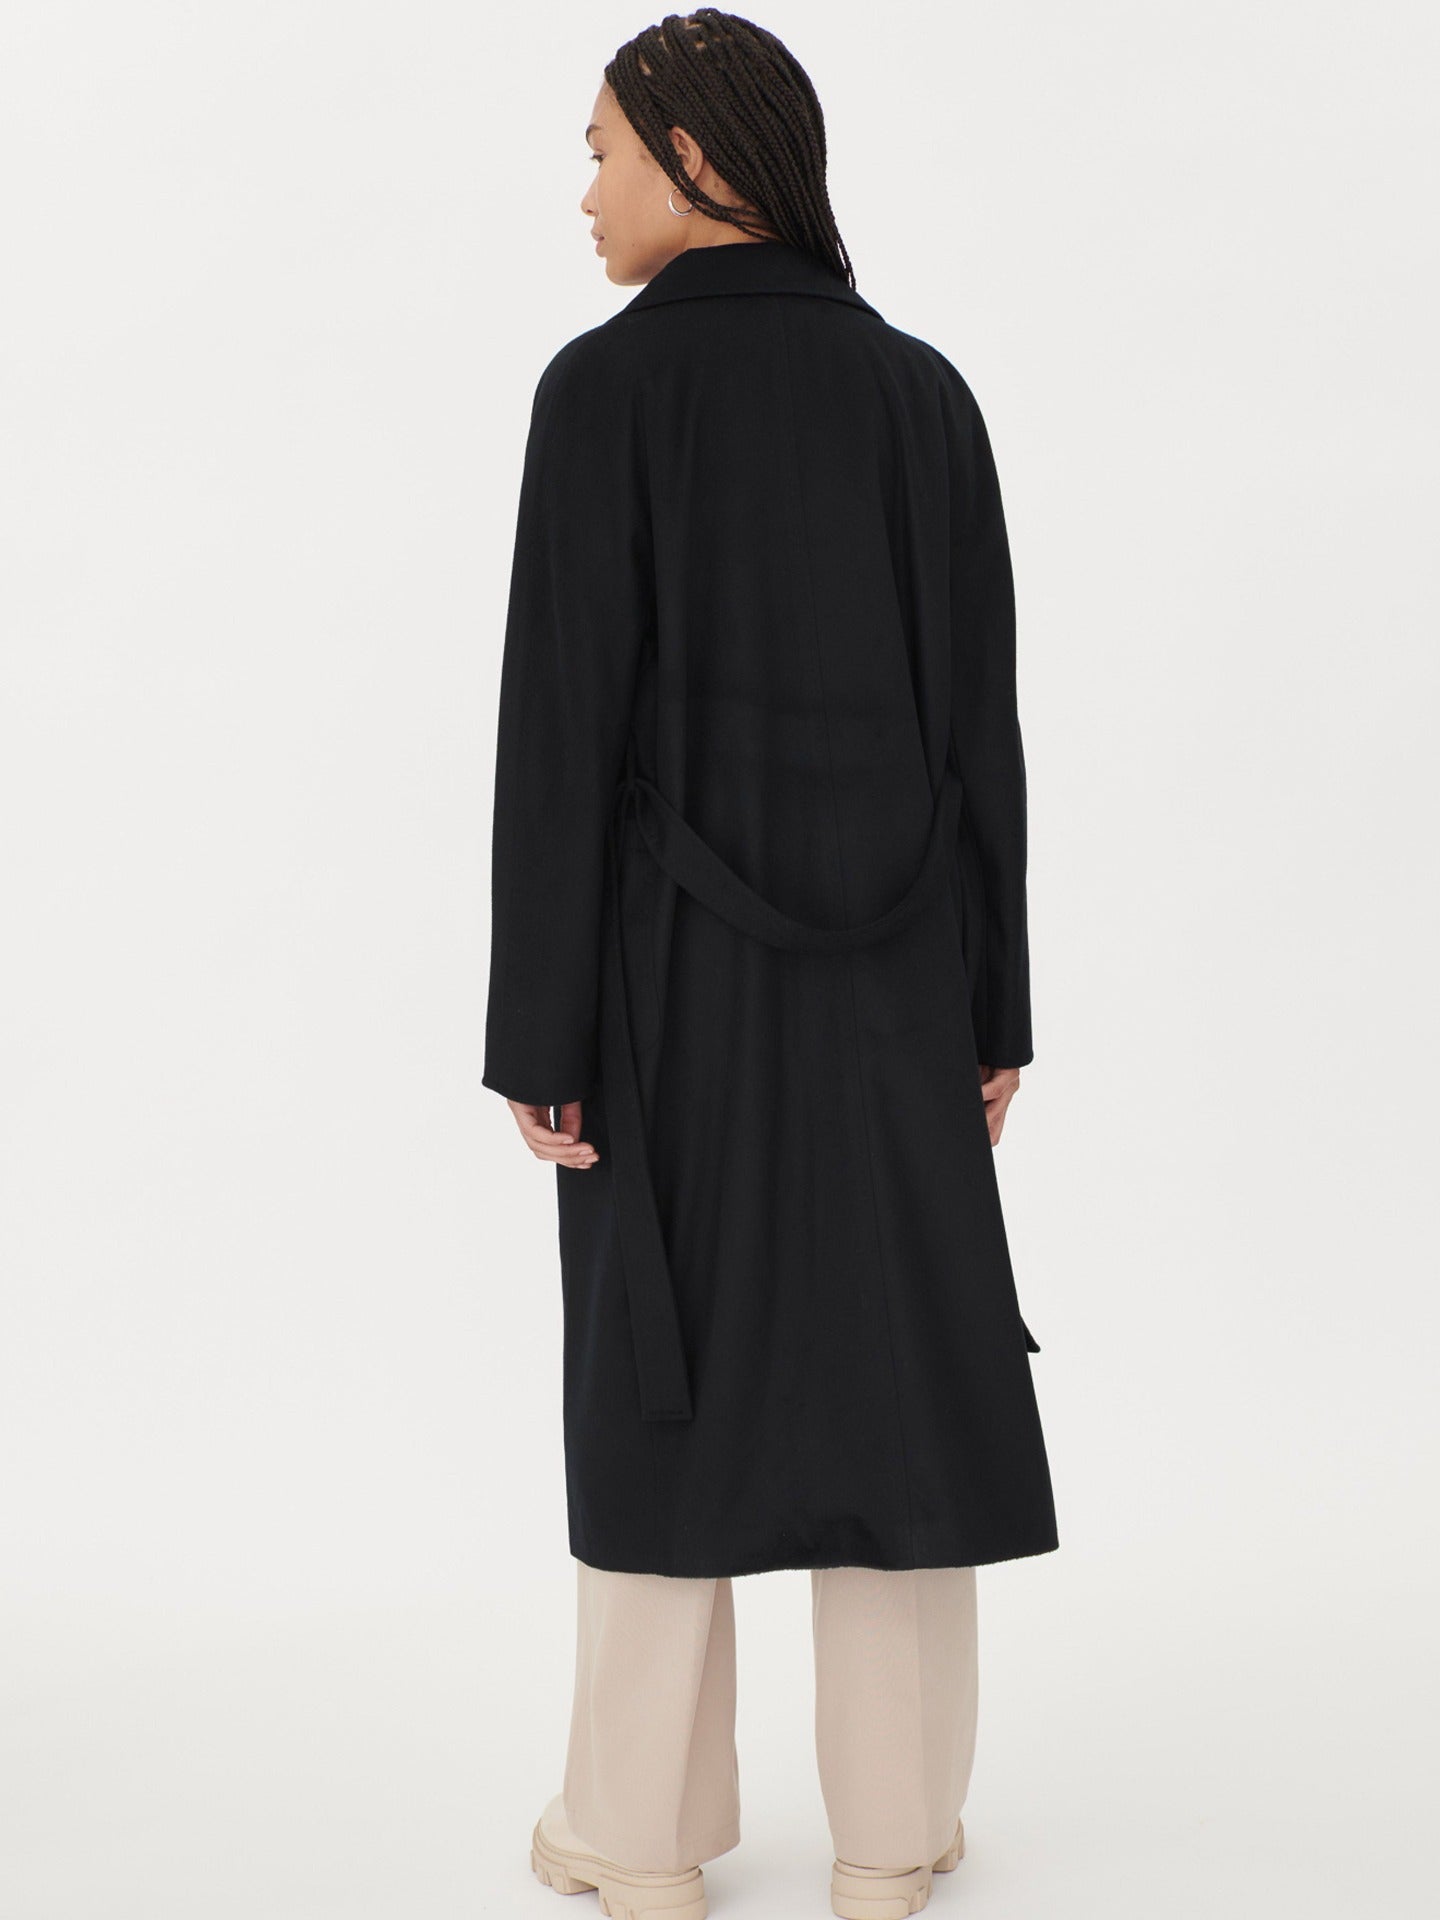 Women's Cashmere Double-Breasted Long Coat Black -  Gobi Cashmere